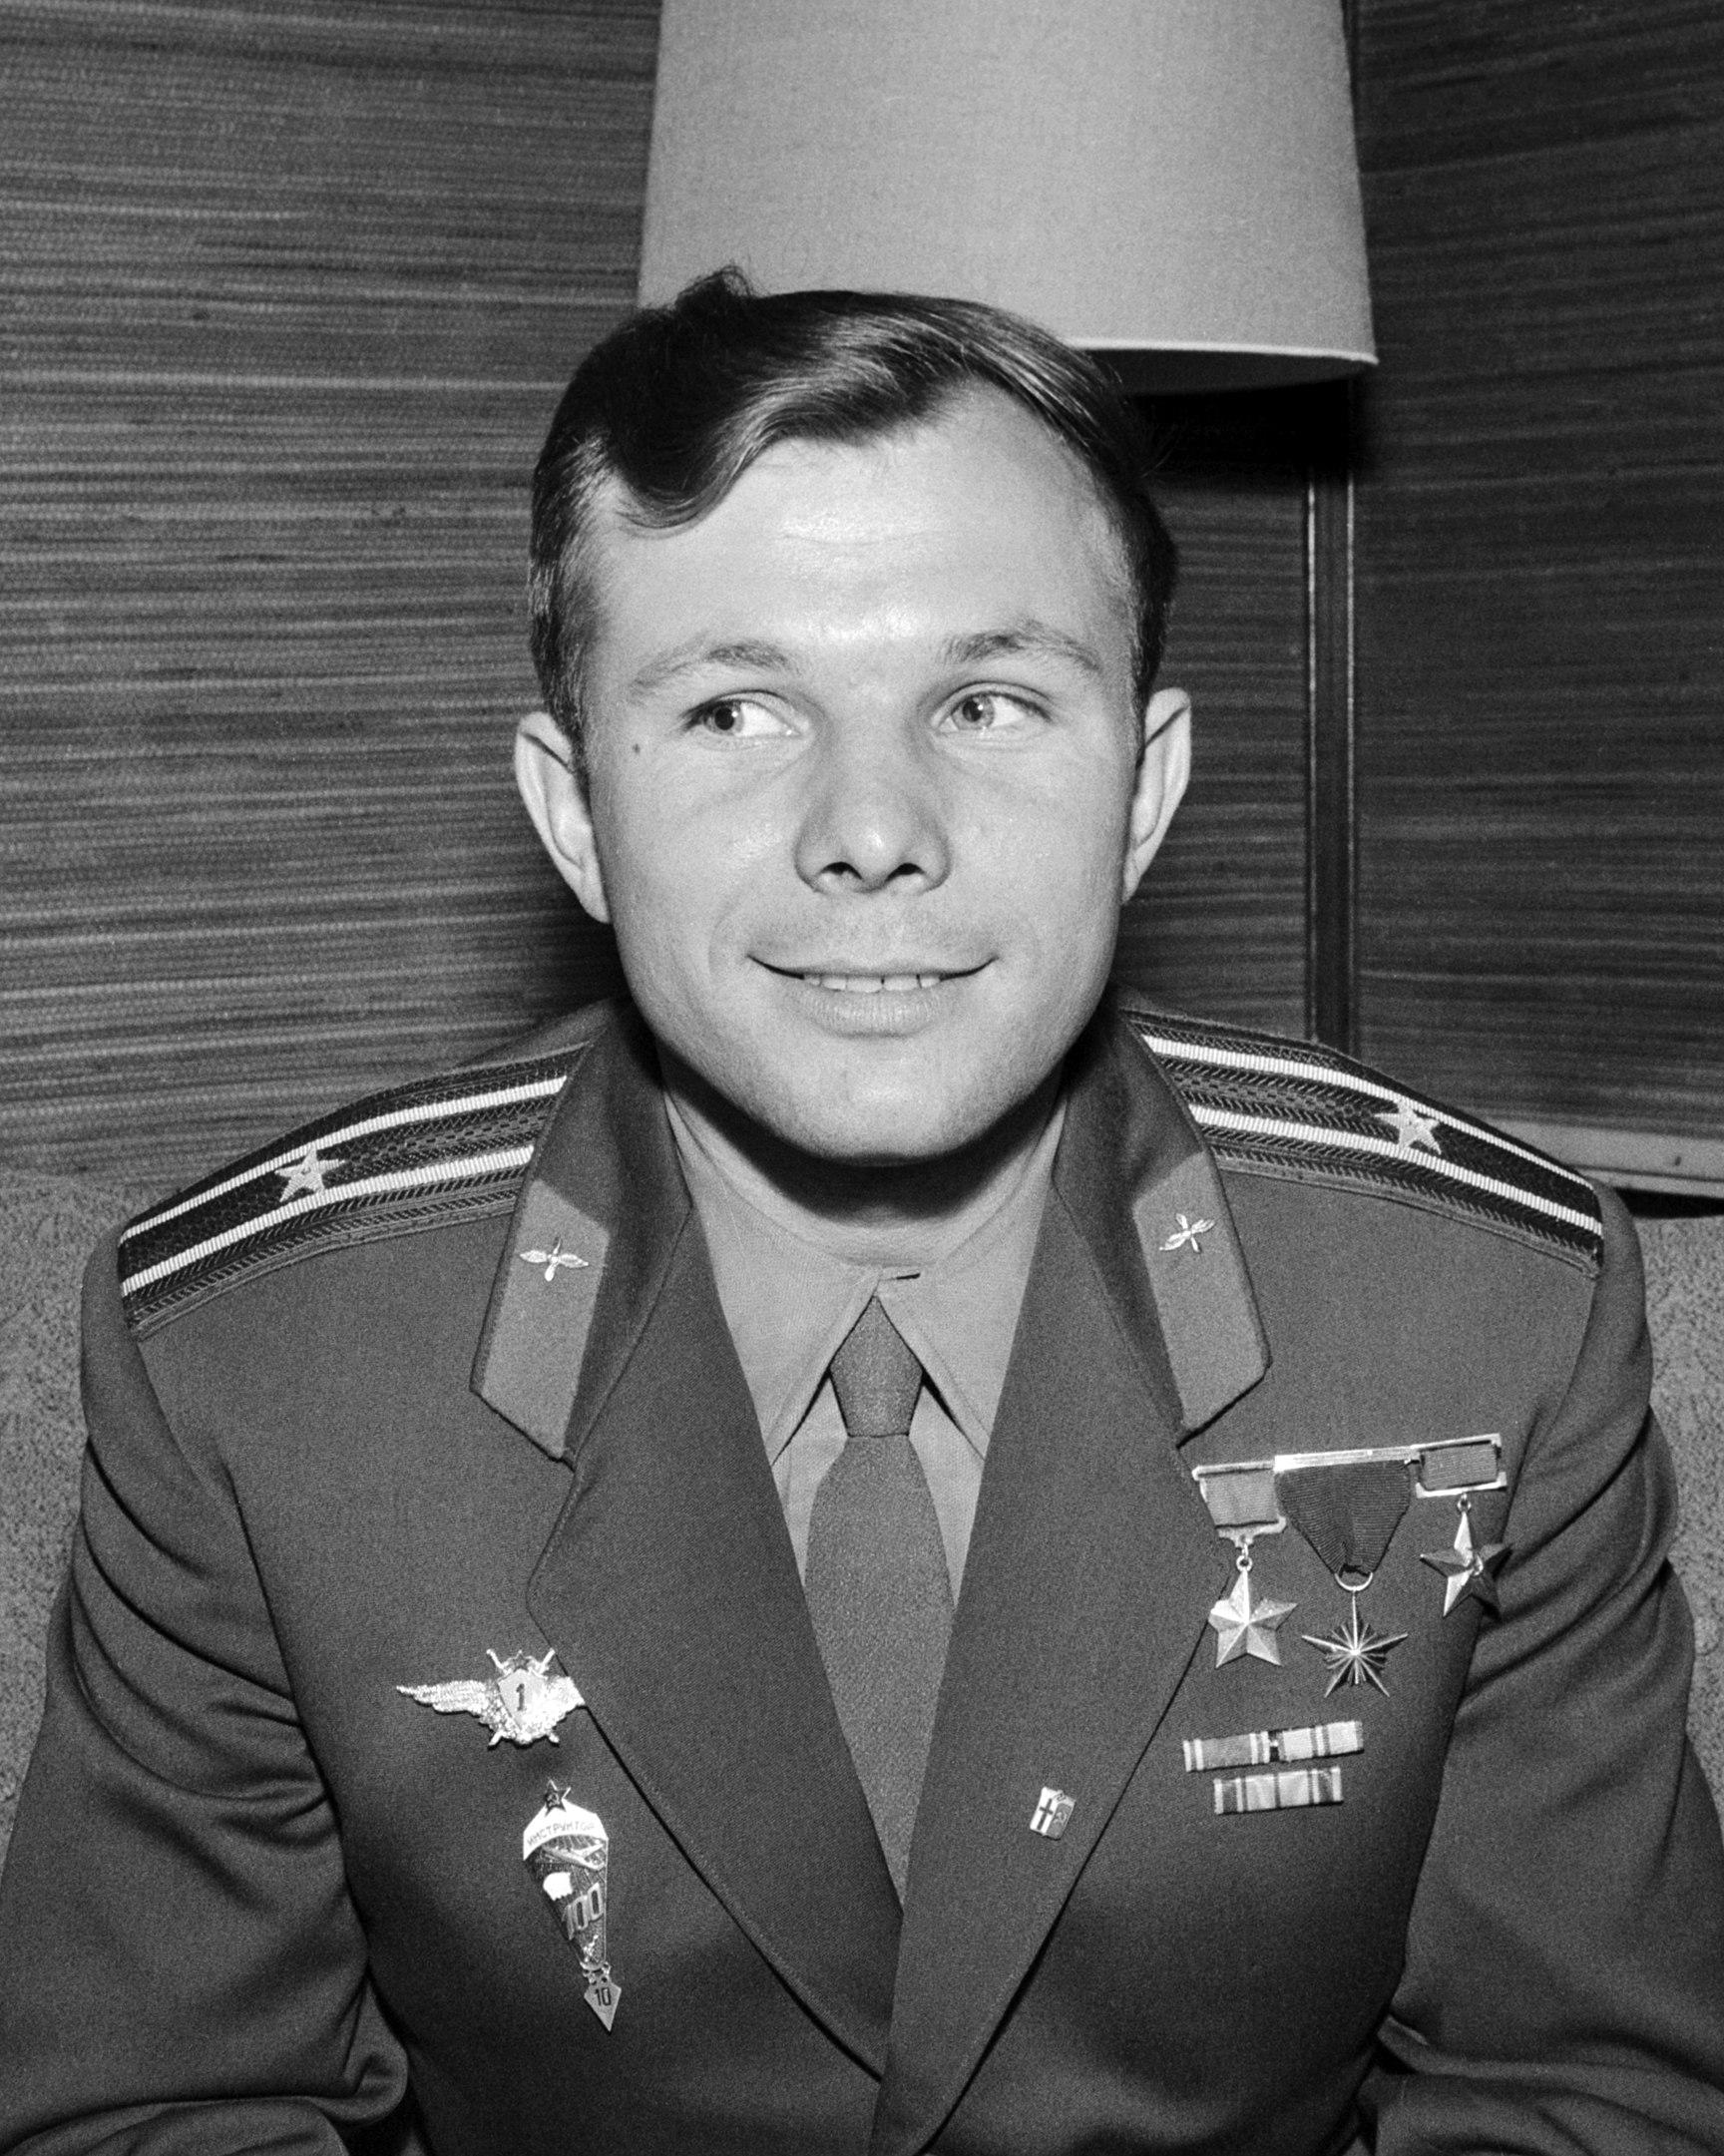 Russian cosmonaut Yuri Gagarin (1934-1968) in a 1961 photo